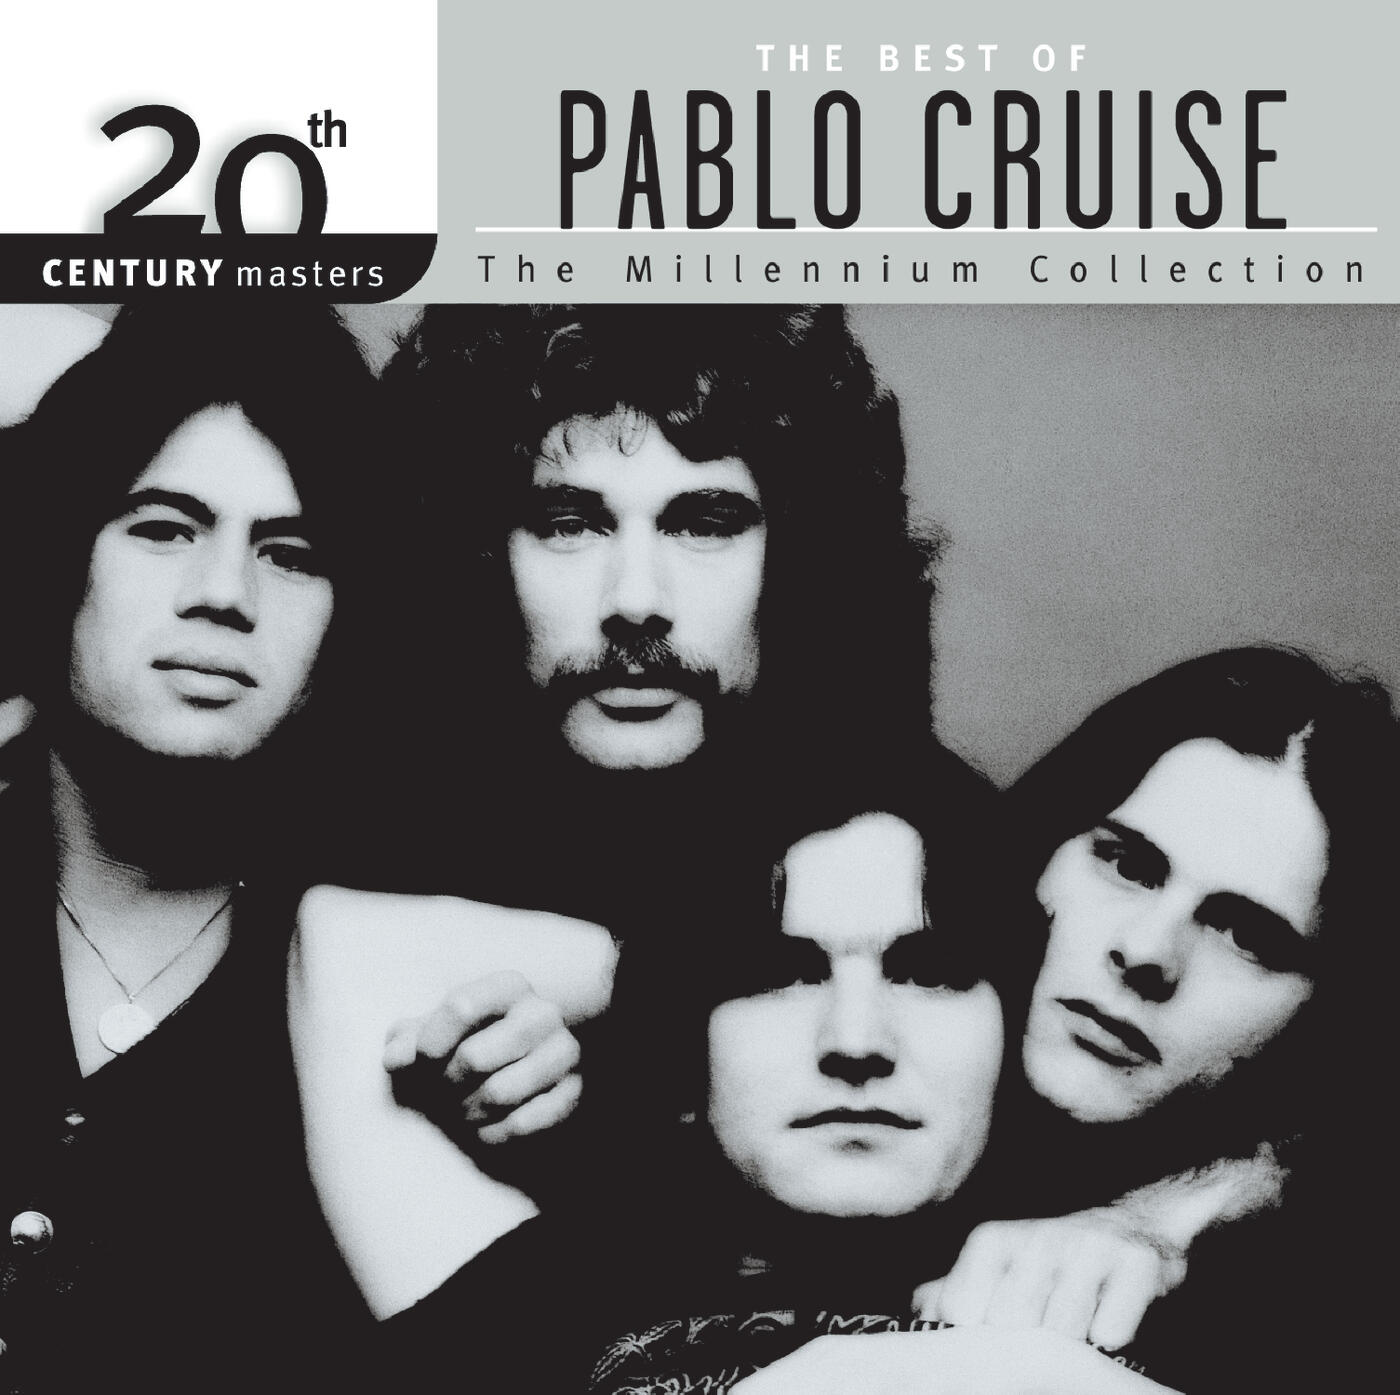 pablo cruise greatest hits full album